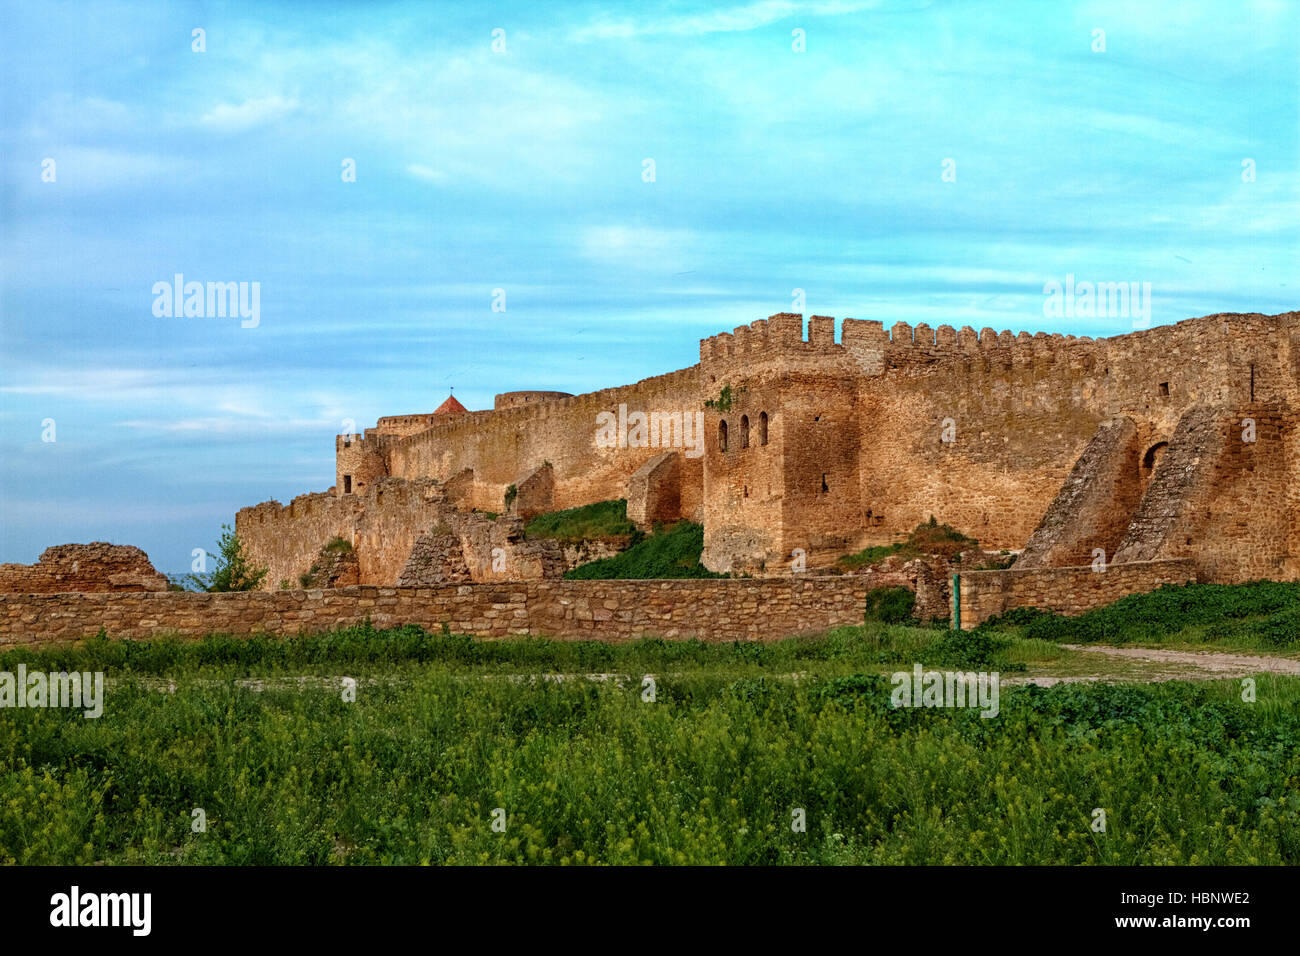 Citadel on the Dniester estuary Stock Photo